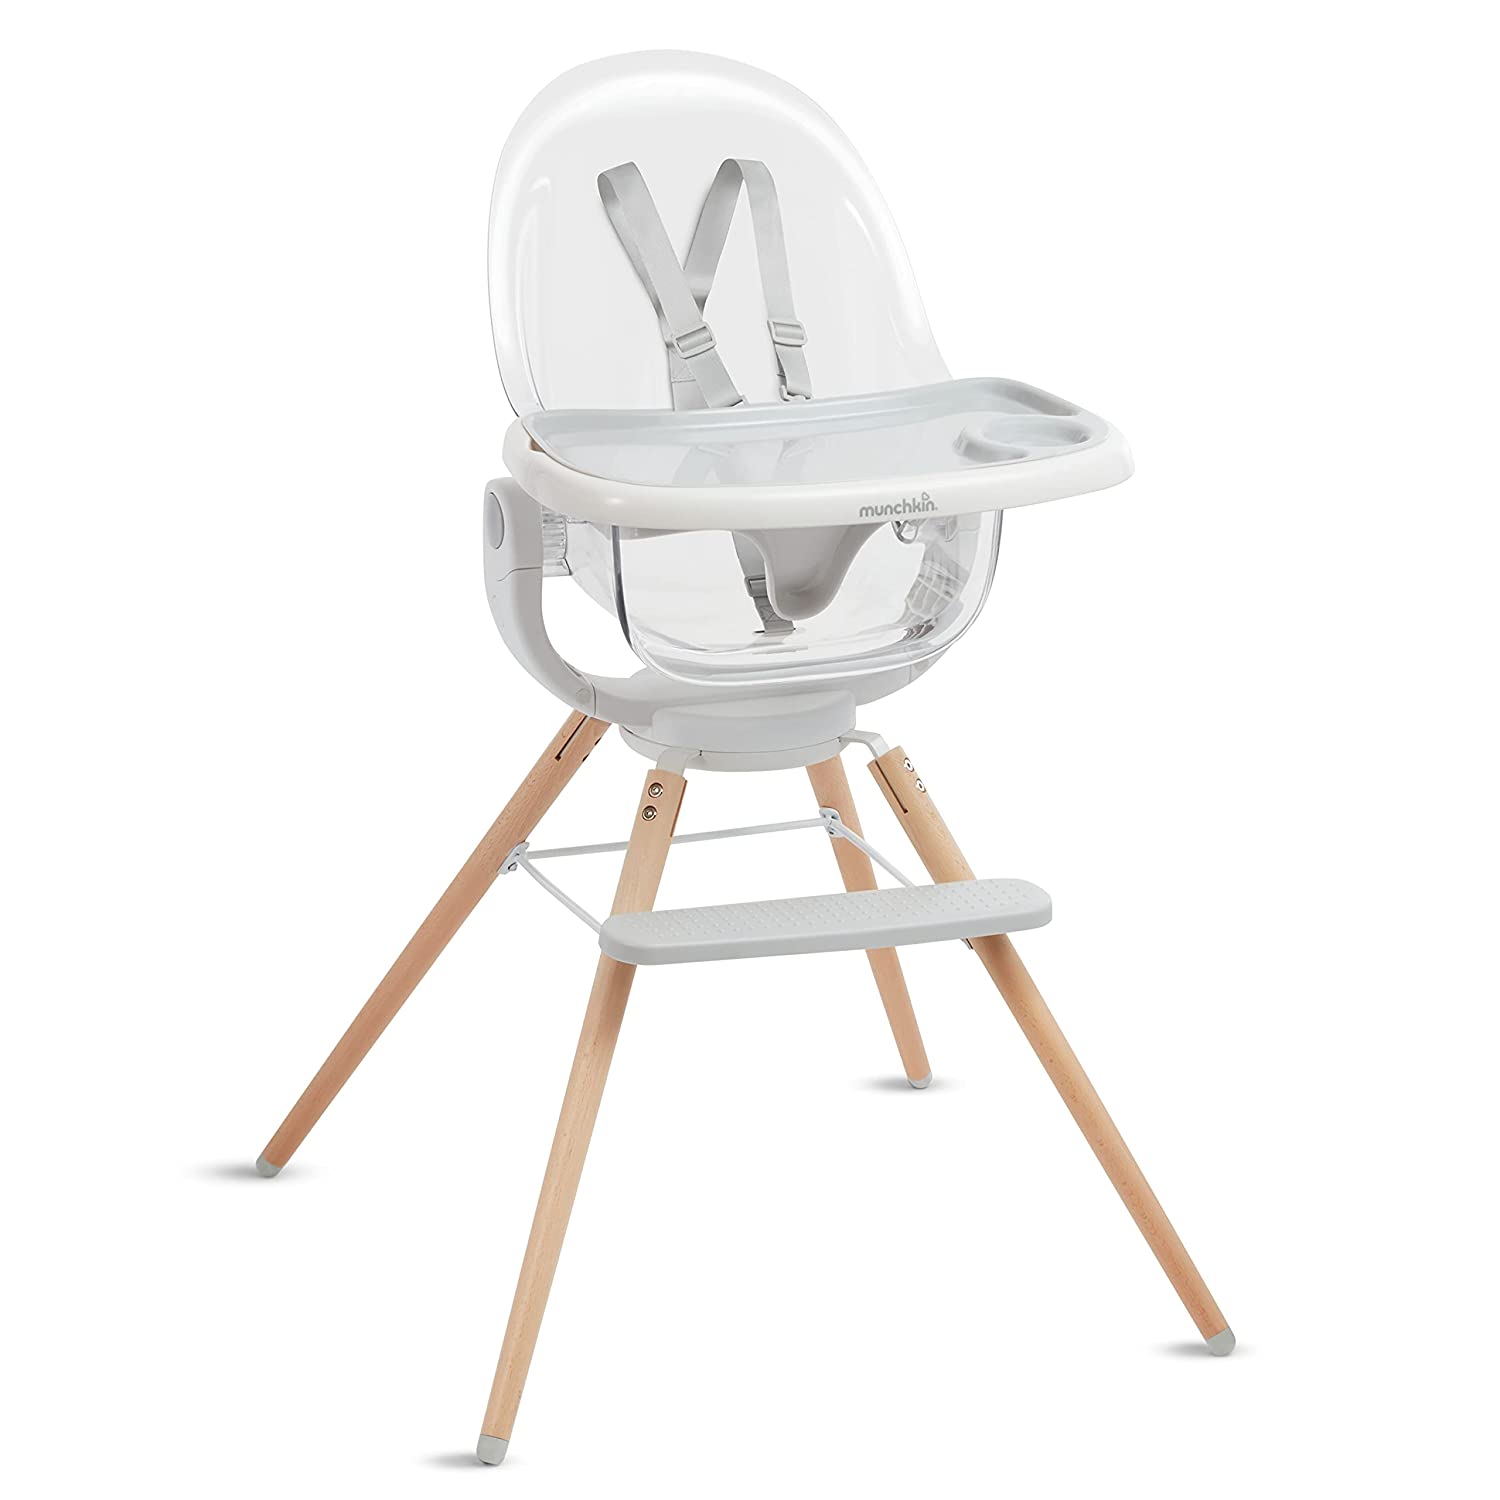 GRUB Dishwasher-Safe Adjustable Baby High Chair